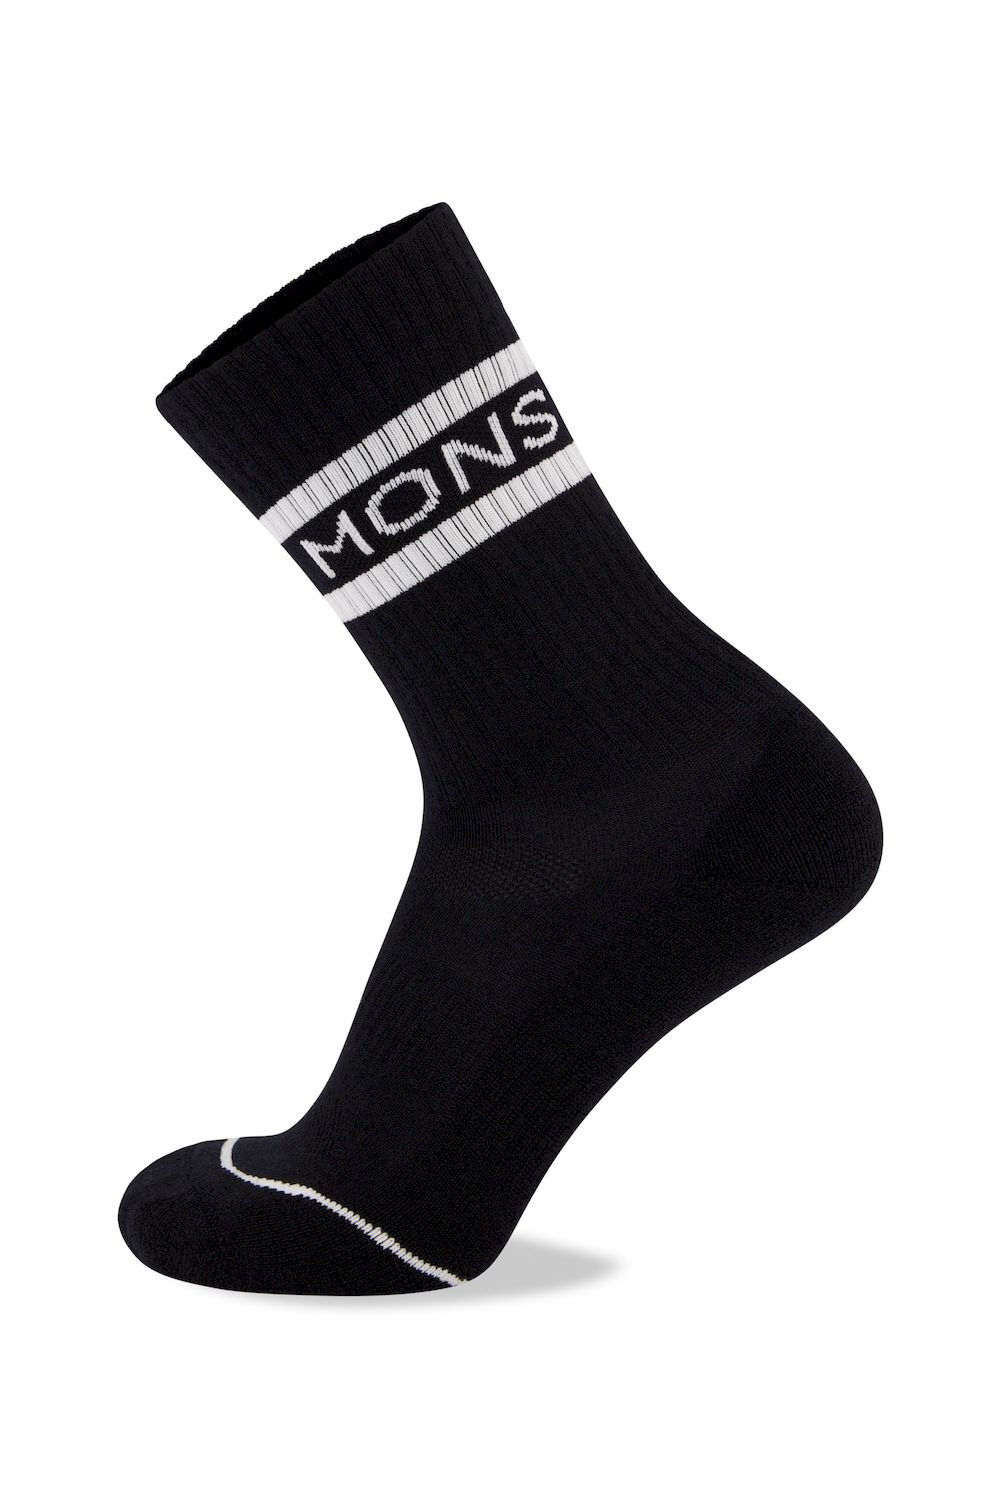 Mons Royale Signature Crew Sock - Cycling socks